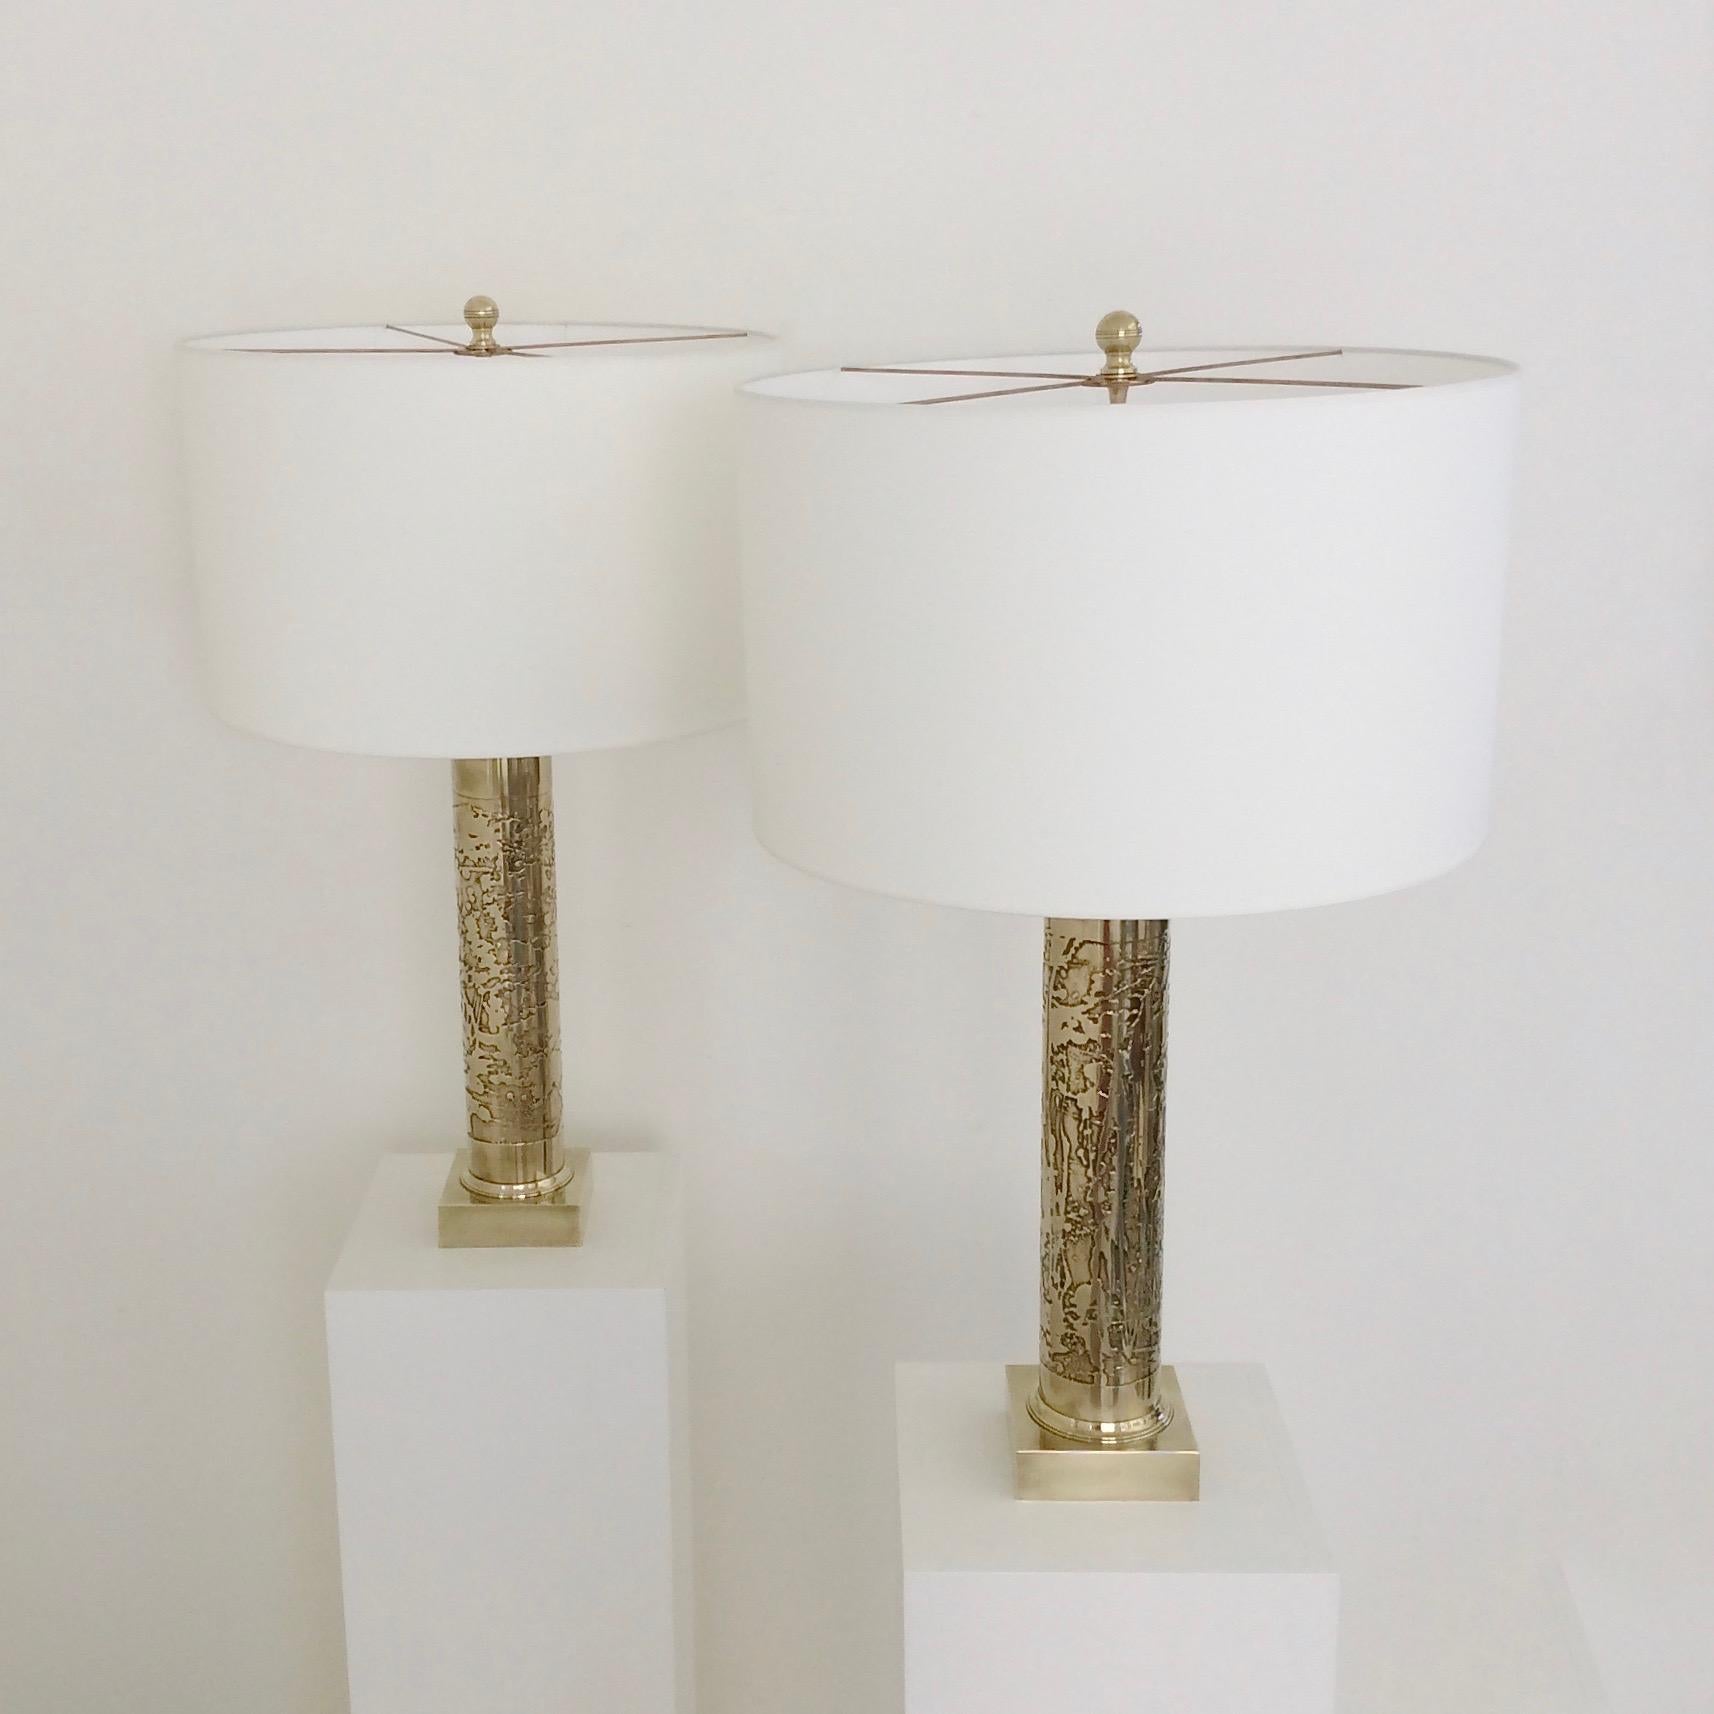 Willy Daro Attributed Design Pair of Table Lamps, circa 1975, Belgium 3